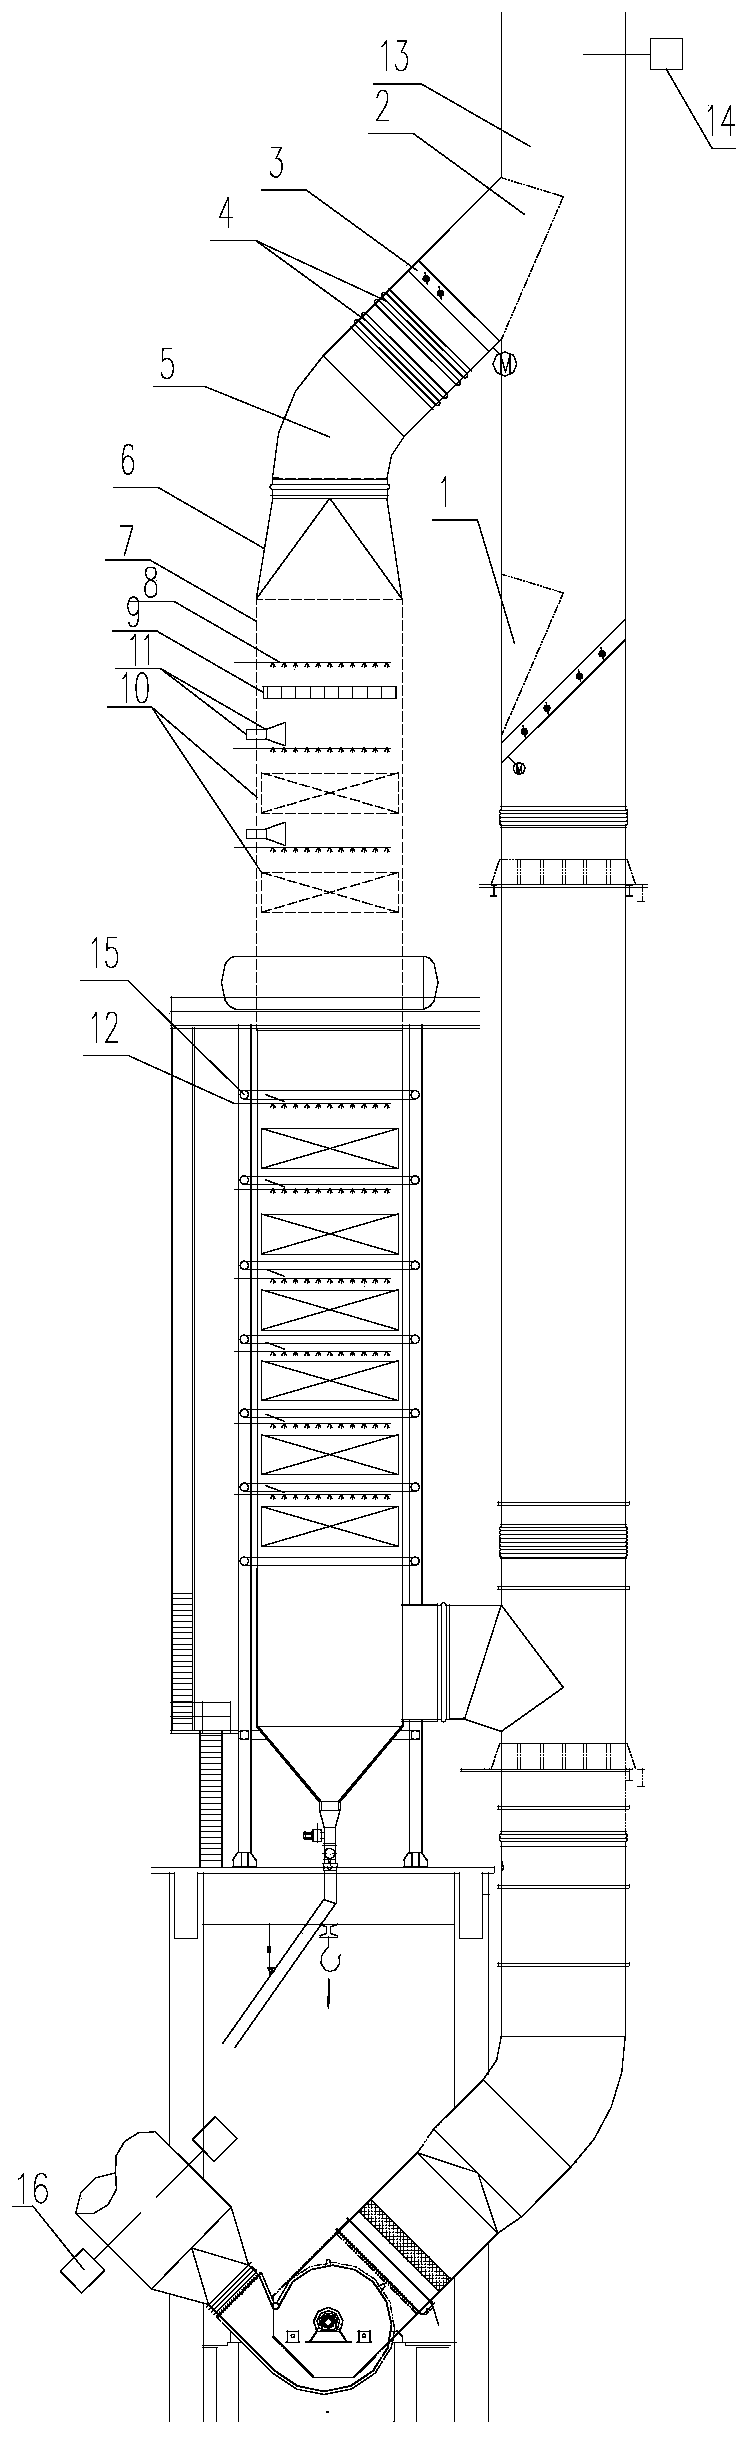 Embedded SCR flue gas denitration reactor and method in waste heat boiler for cement kiln flue gas denitration